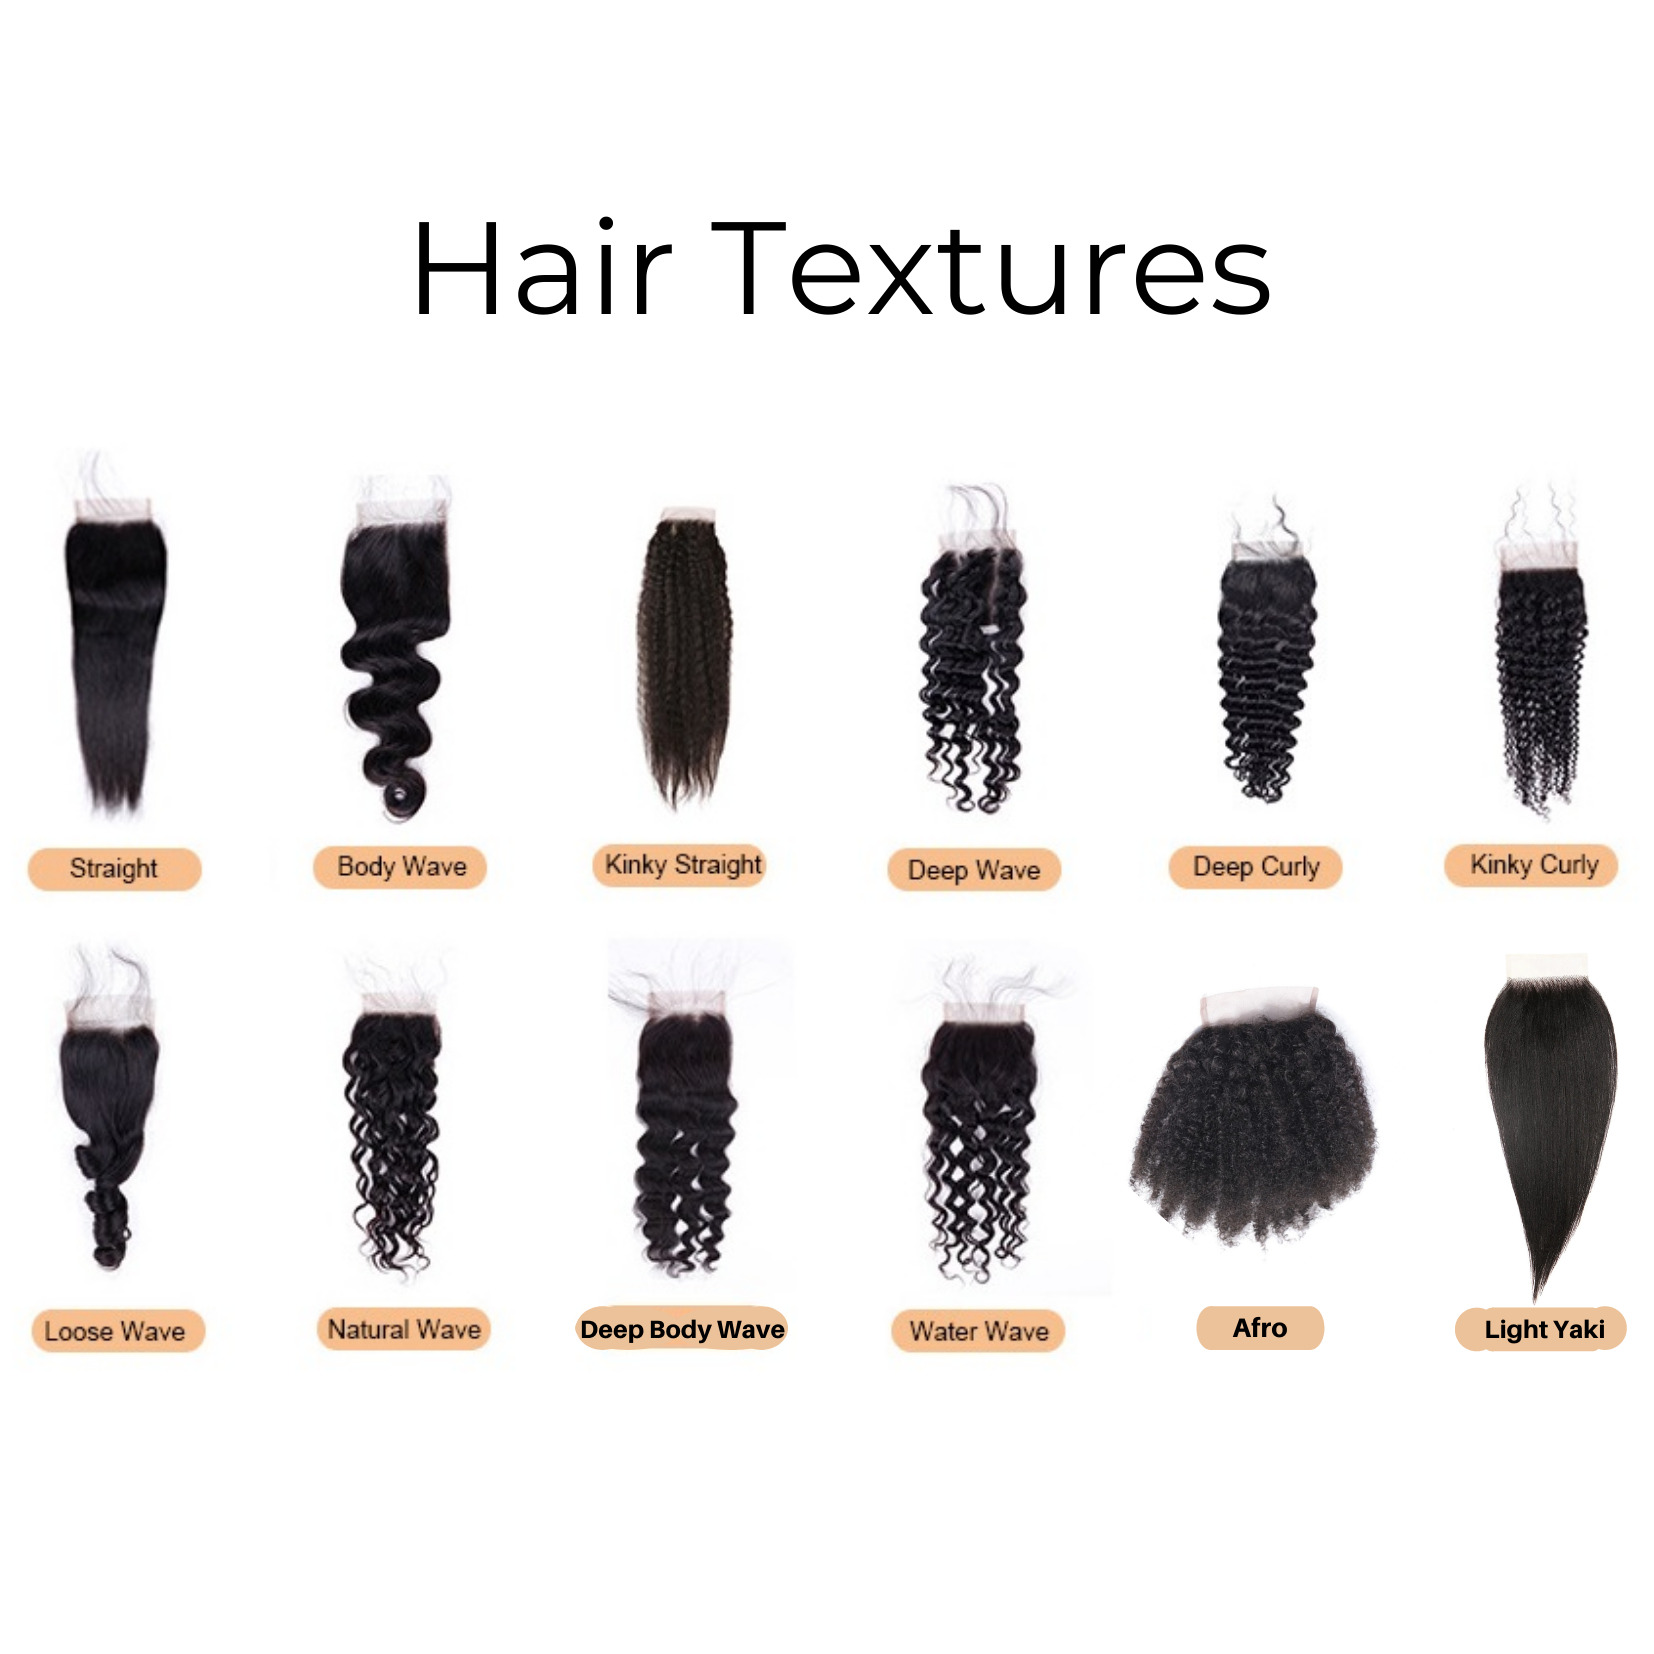 Texture Chart - Tiffani Chanel Luxury Hair